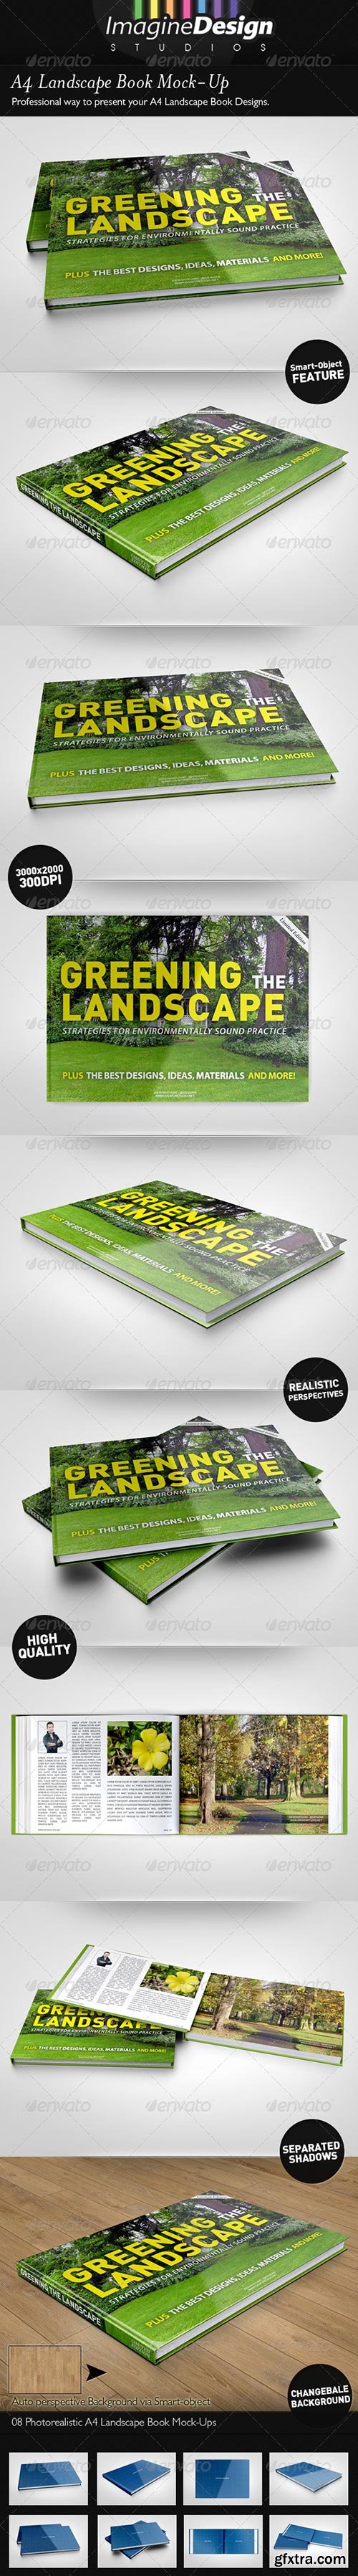 GraphicRiver - A4 Landscape Book Mock-Up